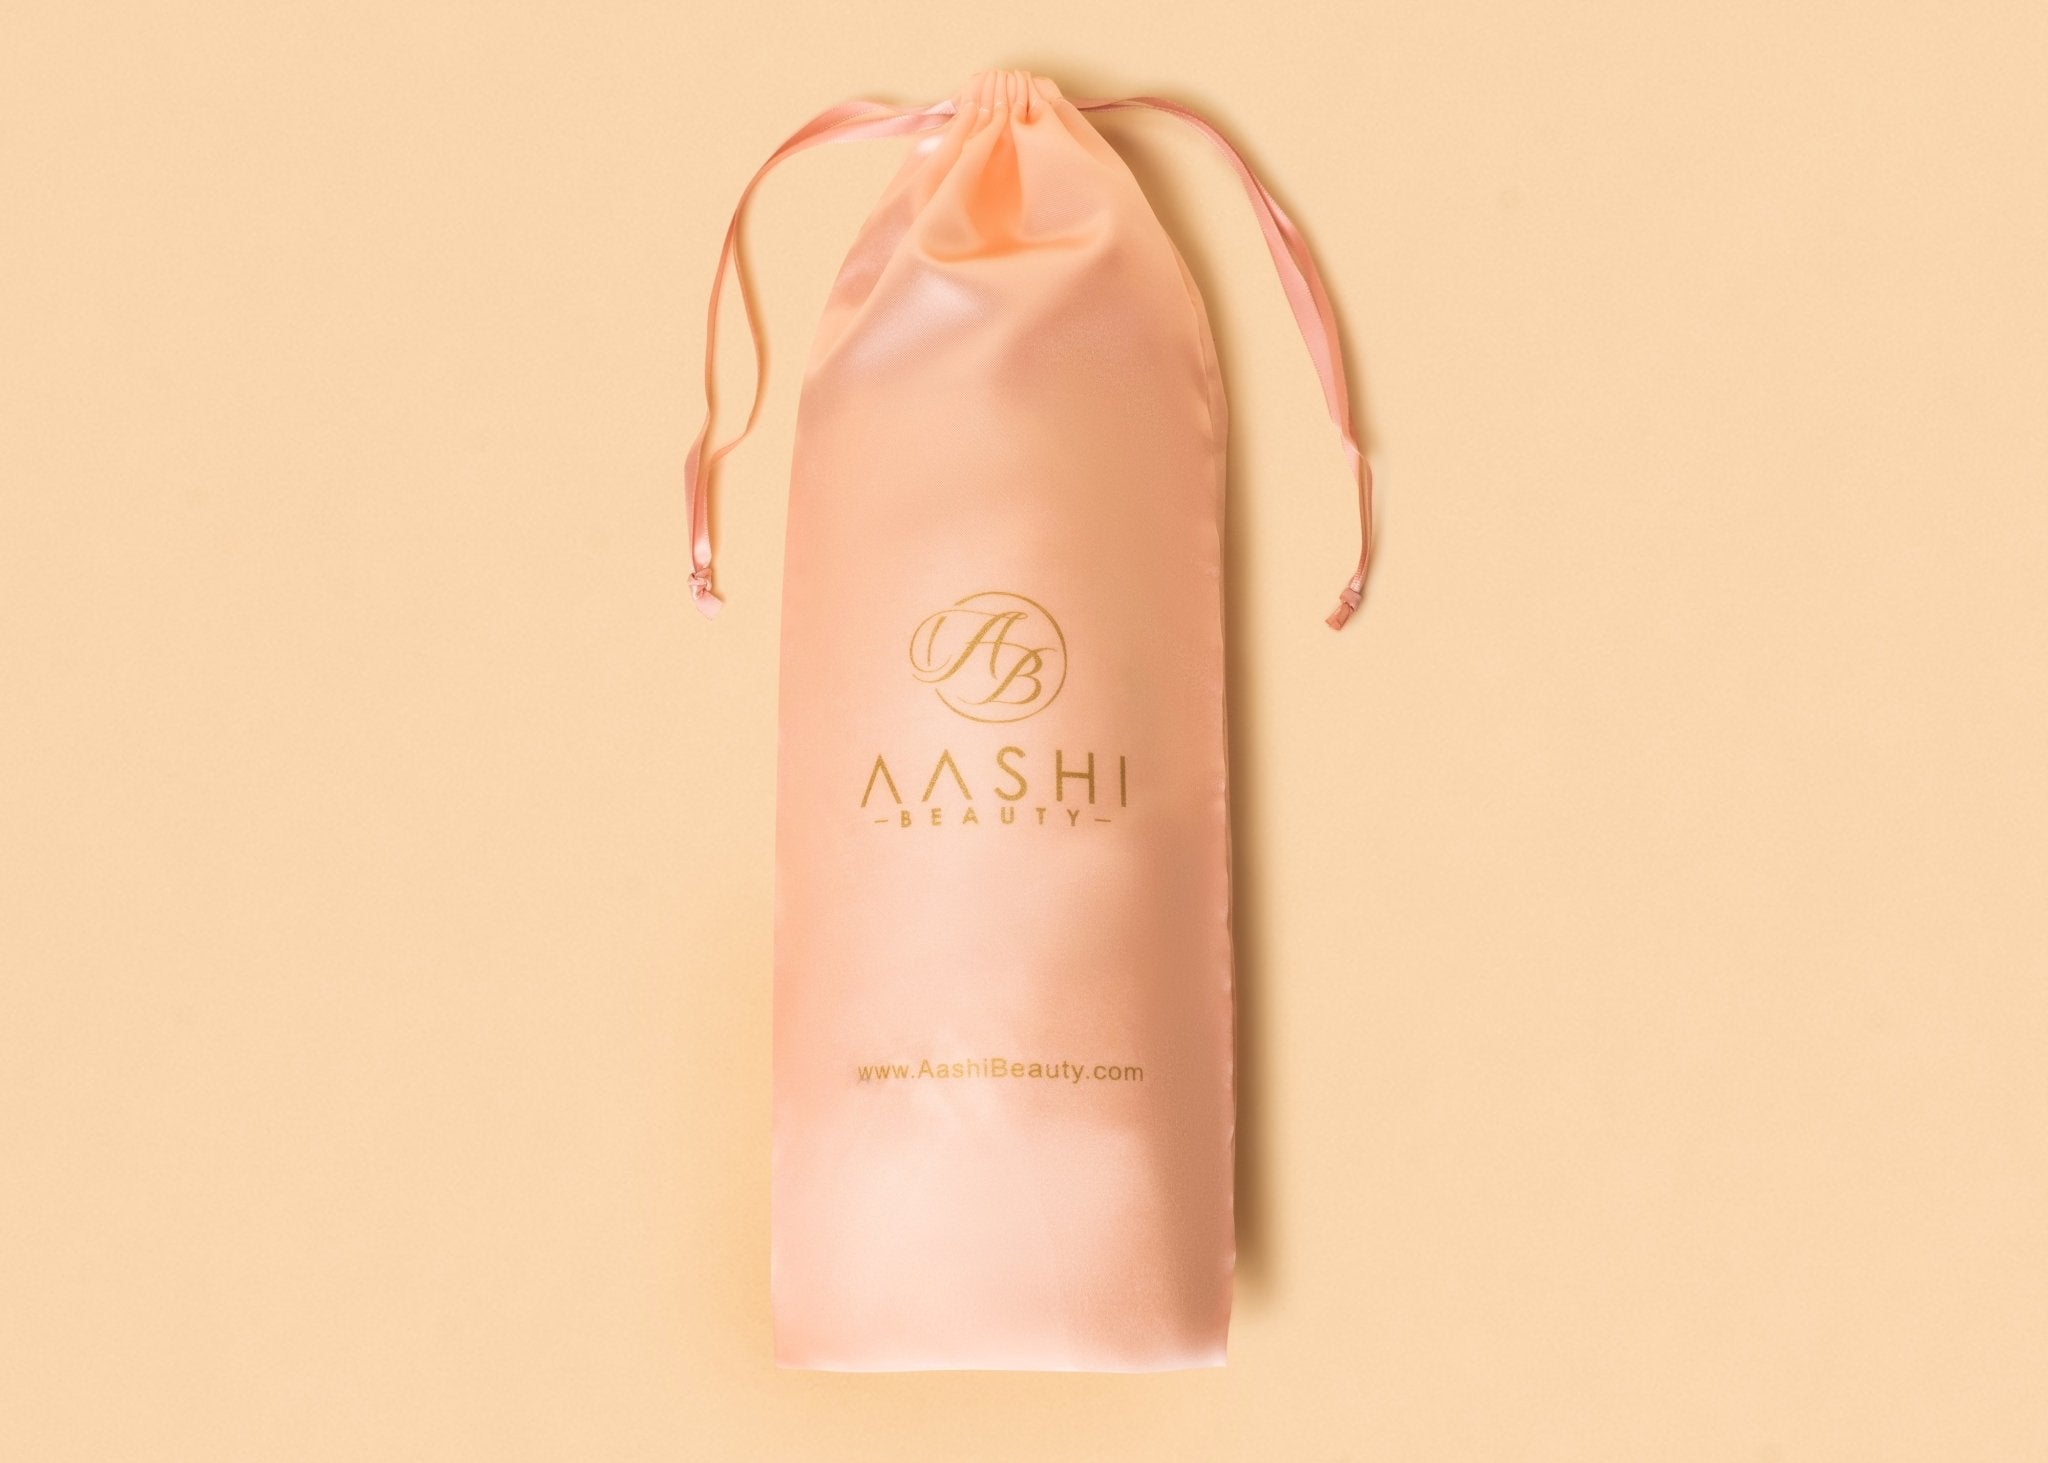 Stocking Stuffer Pink Satin Pouch - Aashi Beauty